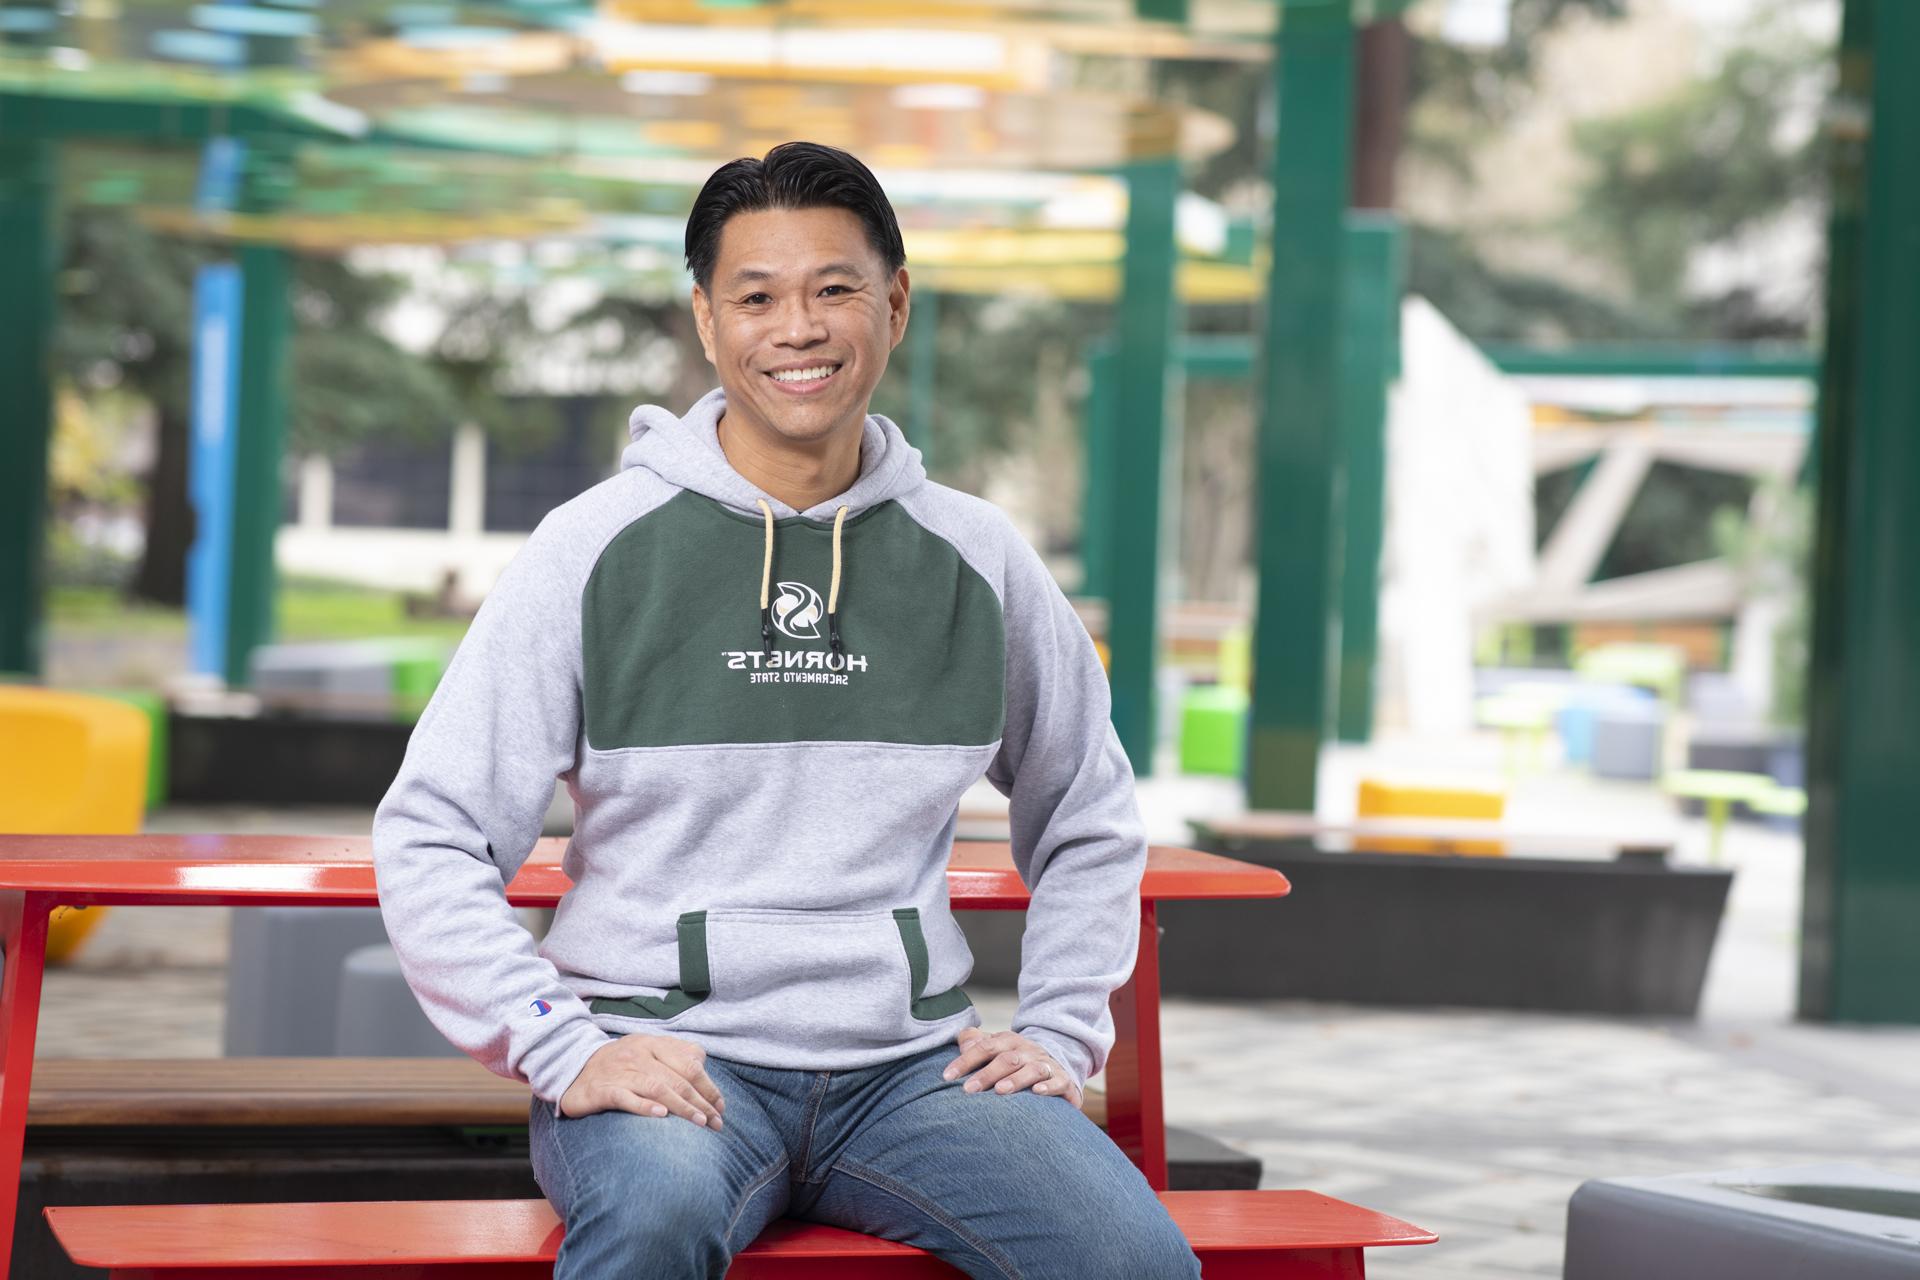 Alumnus Baldwin Chiu sports his Sac State gear and a huge smile on campus.